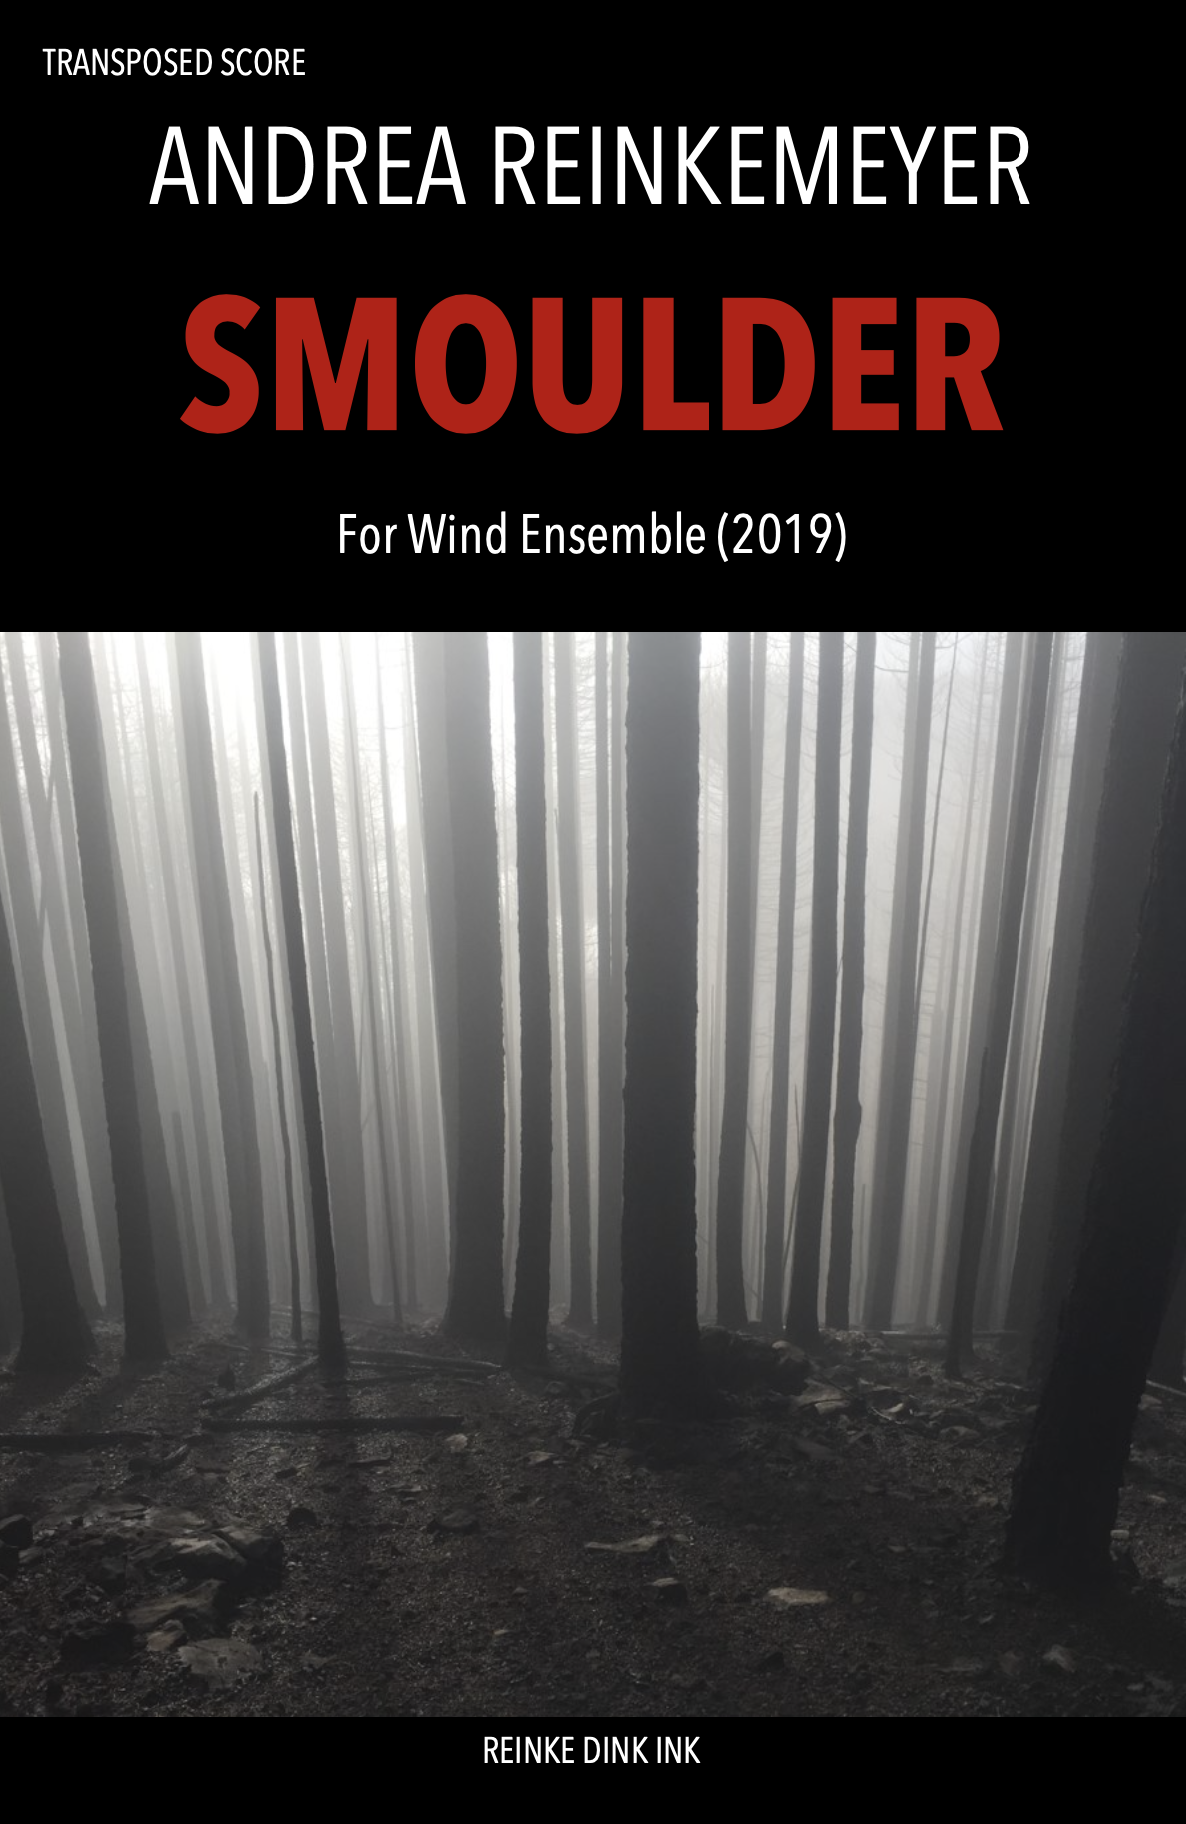 Smoulder (Score Only) by Andrea Reinkemeyer